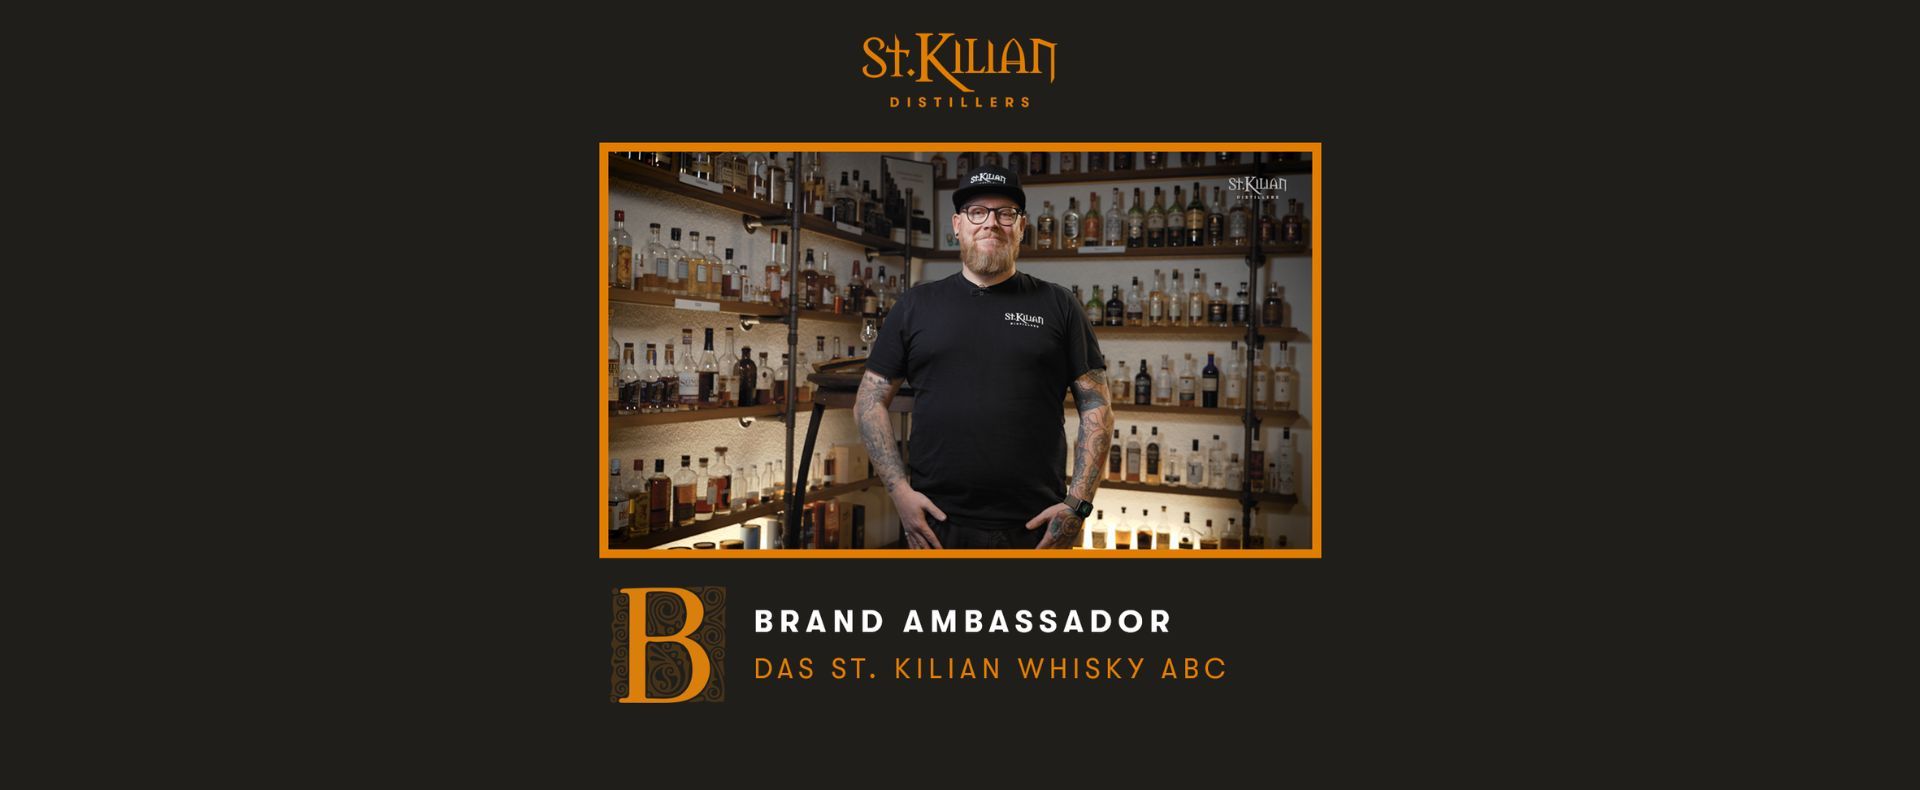 Whisky ABC - B wie Brand Ambassador